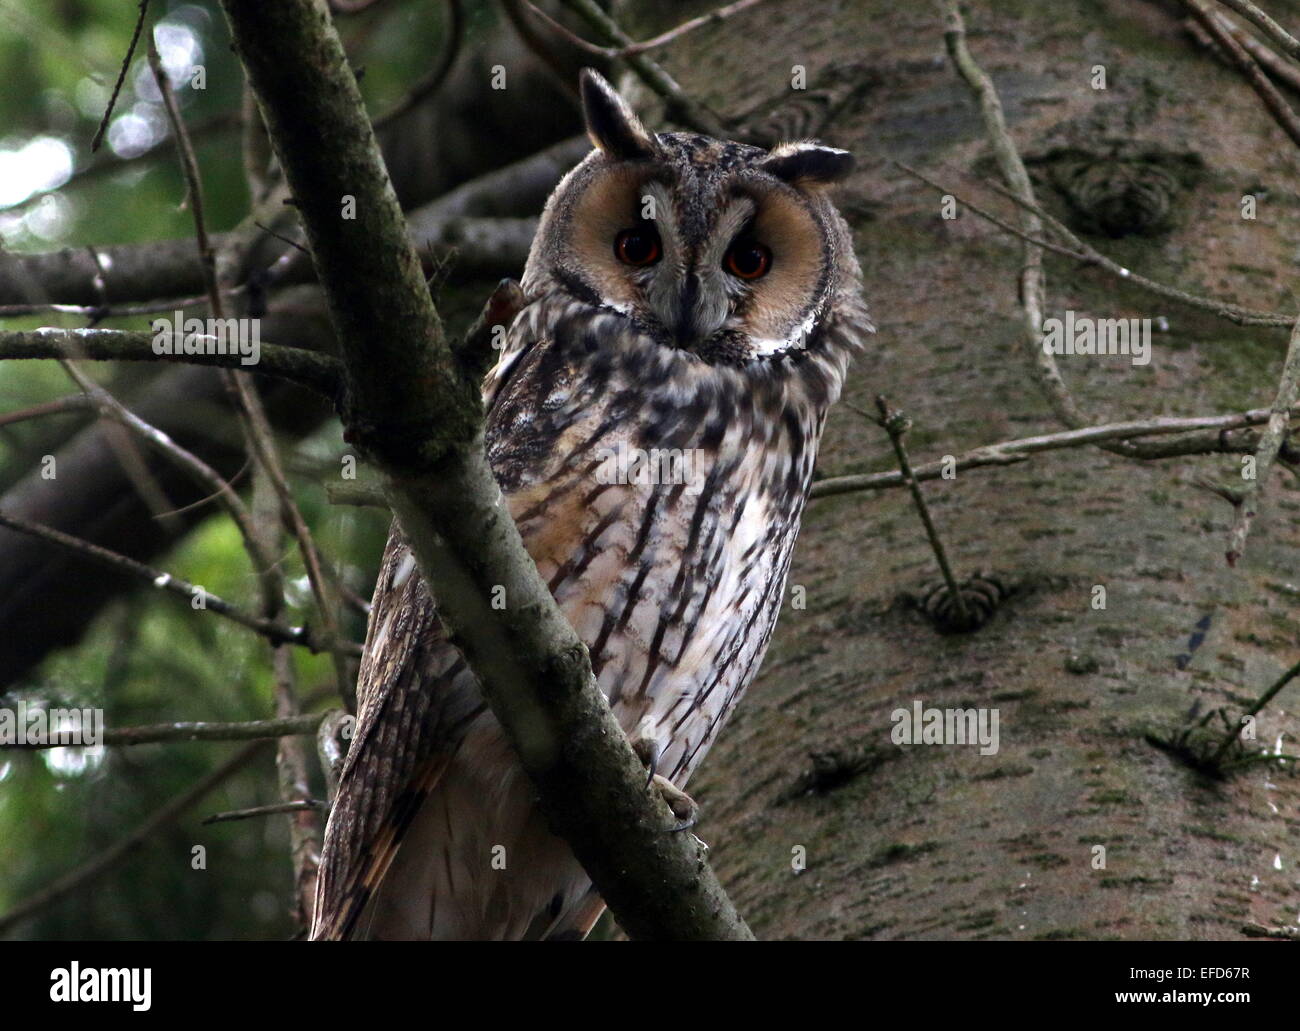 Very alert and awake Long-eared Owl (Asio otus) in a pine tree during daytime, facing camera Stock Photo